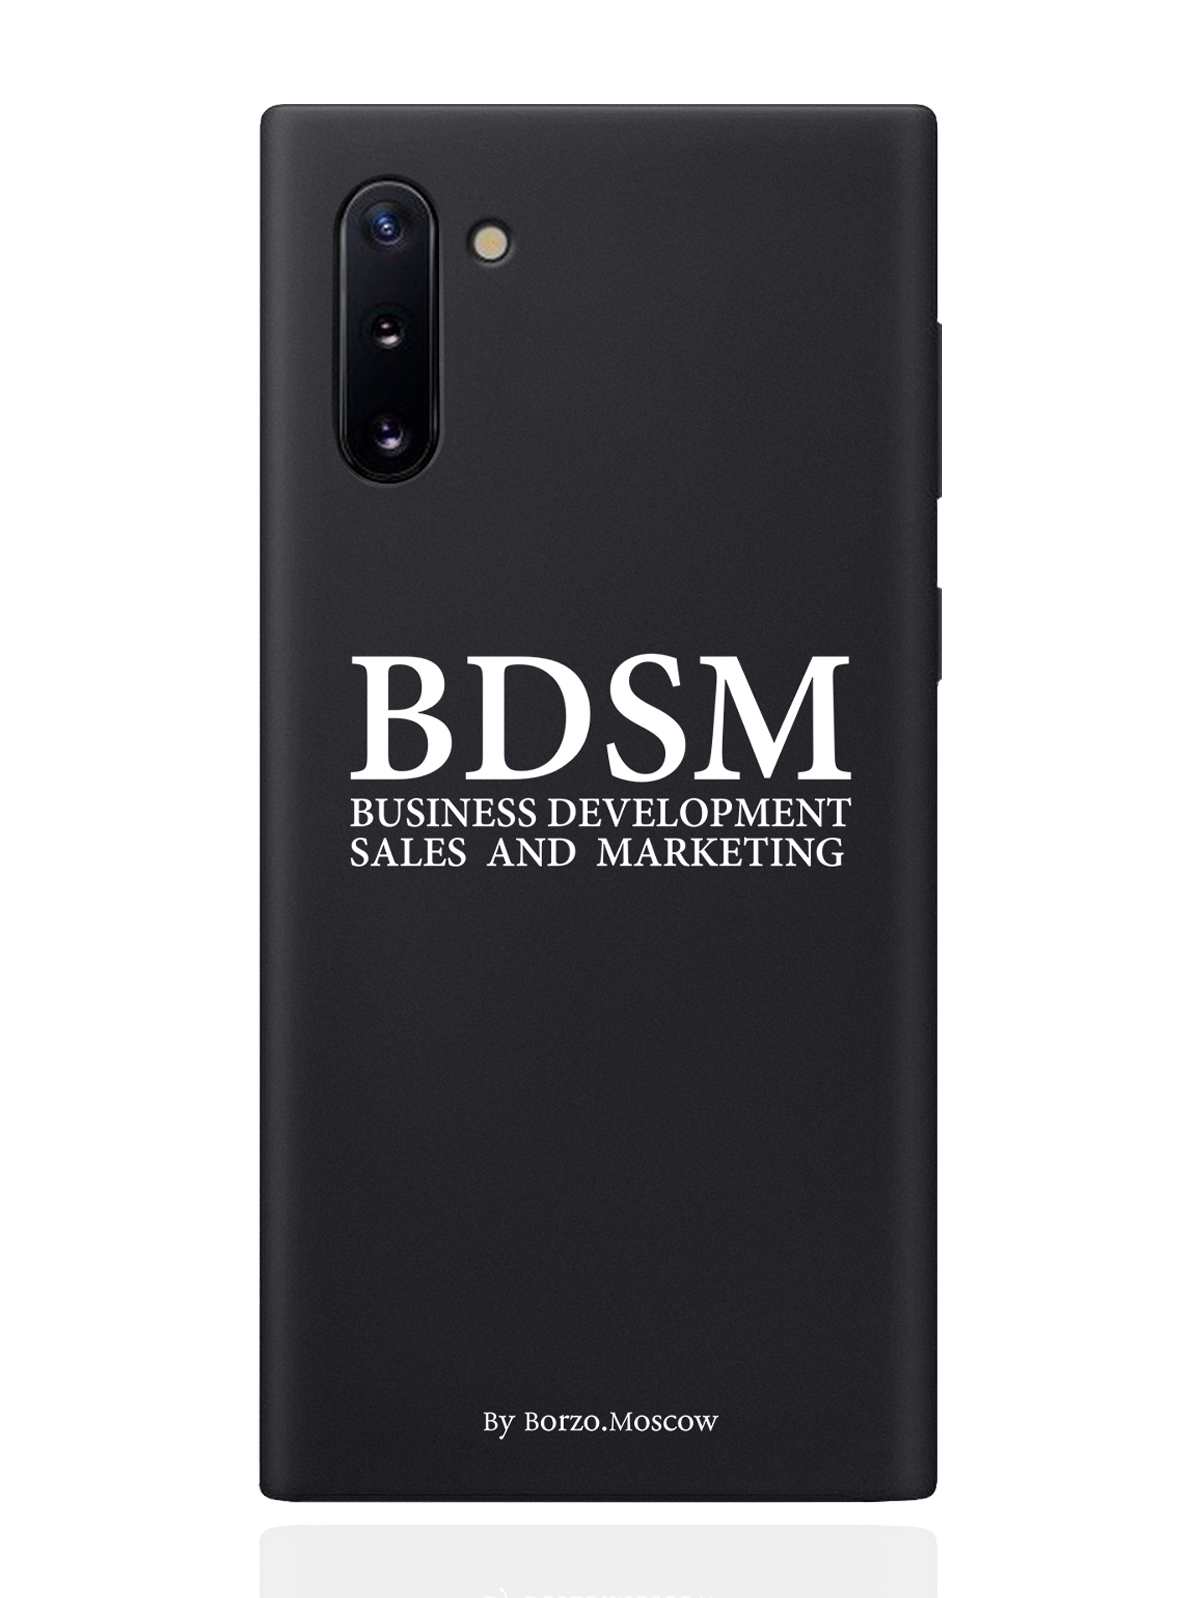 Чехол Borzo.Moscow для Samsung Galaxy Note 10 BDSM черный